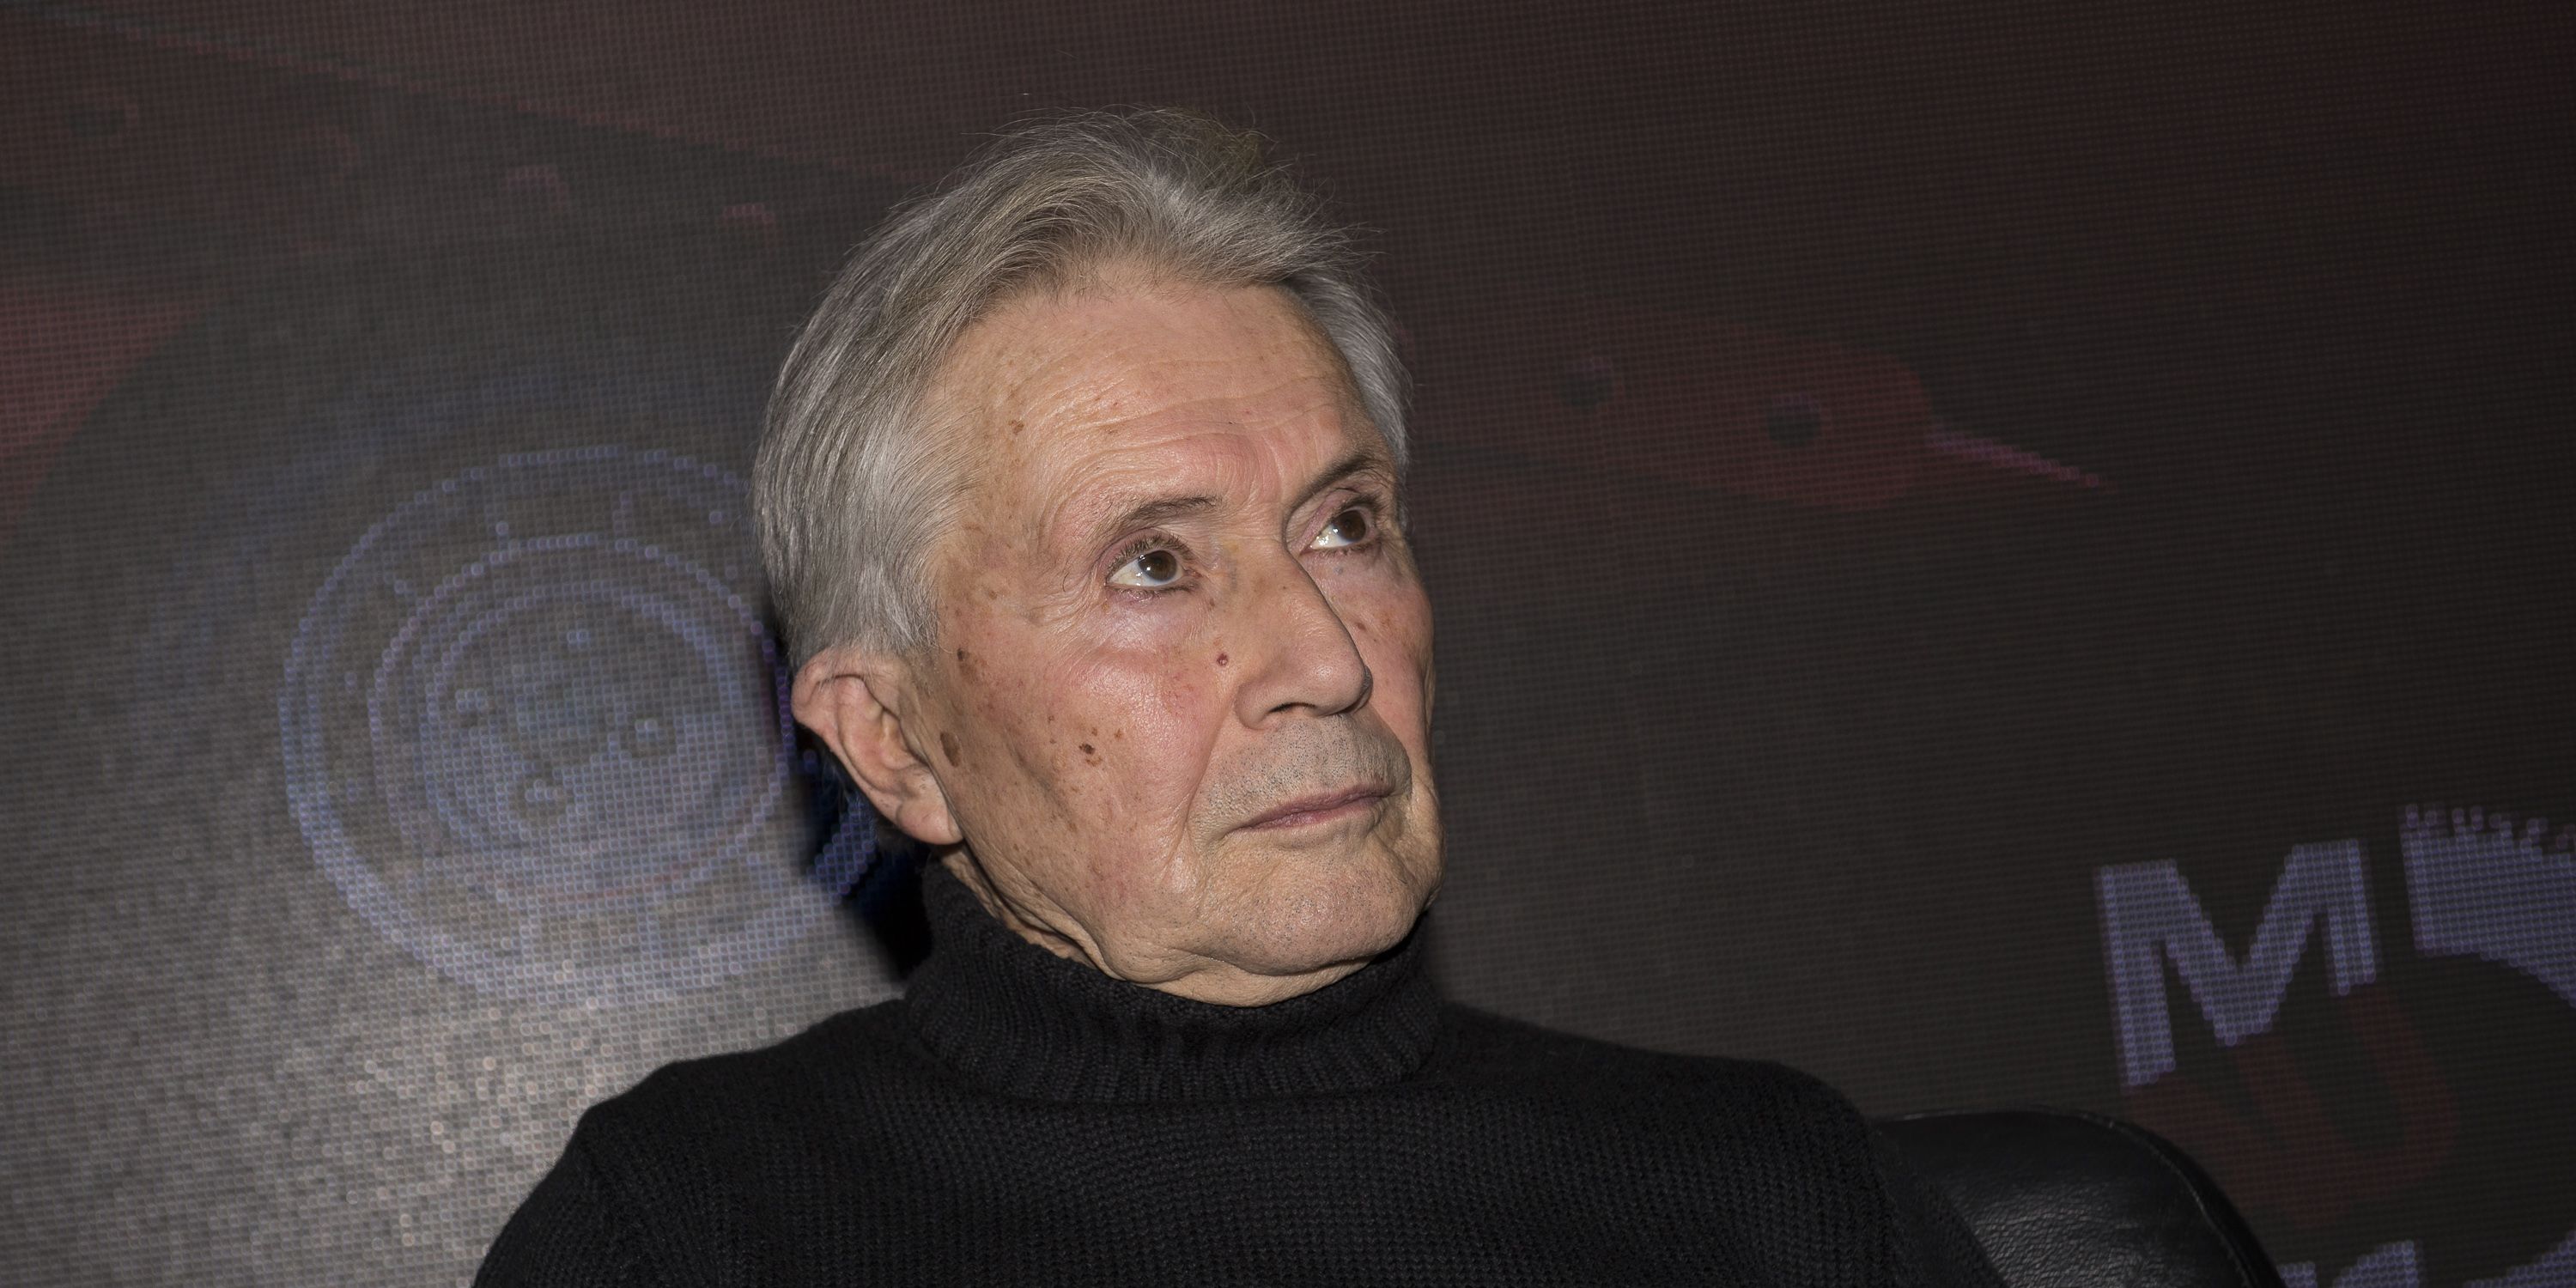 Marcello Gandini, Legendary Italian Designer, Dead at 85